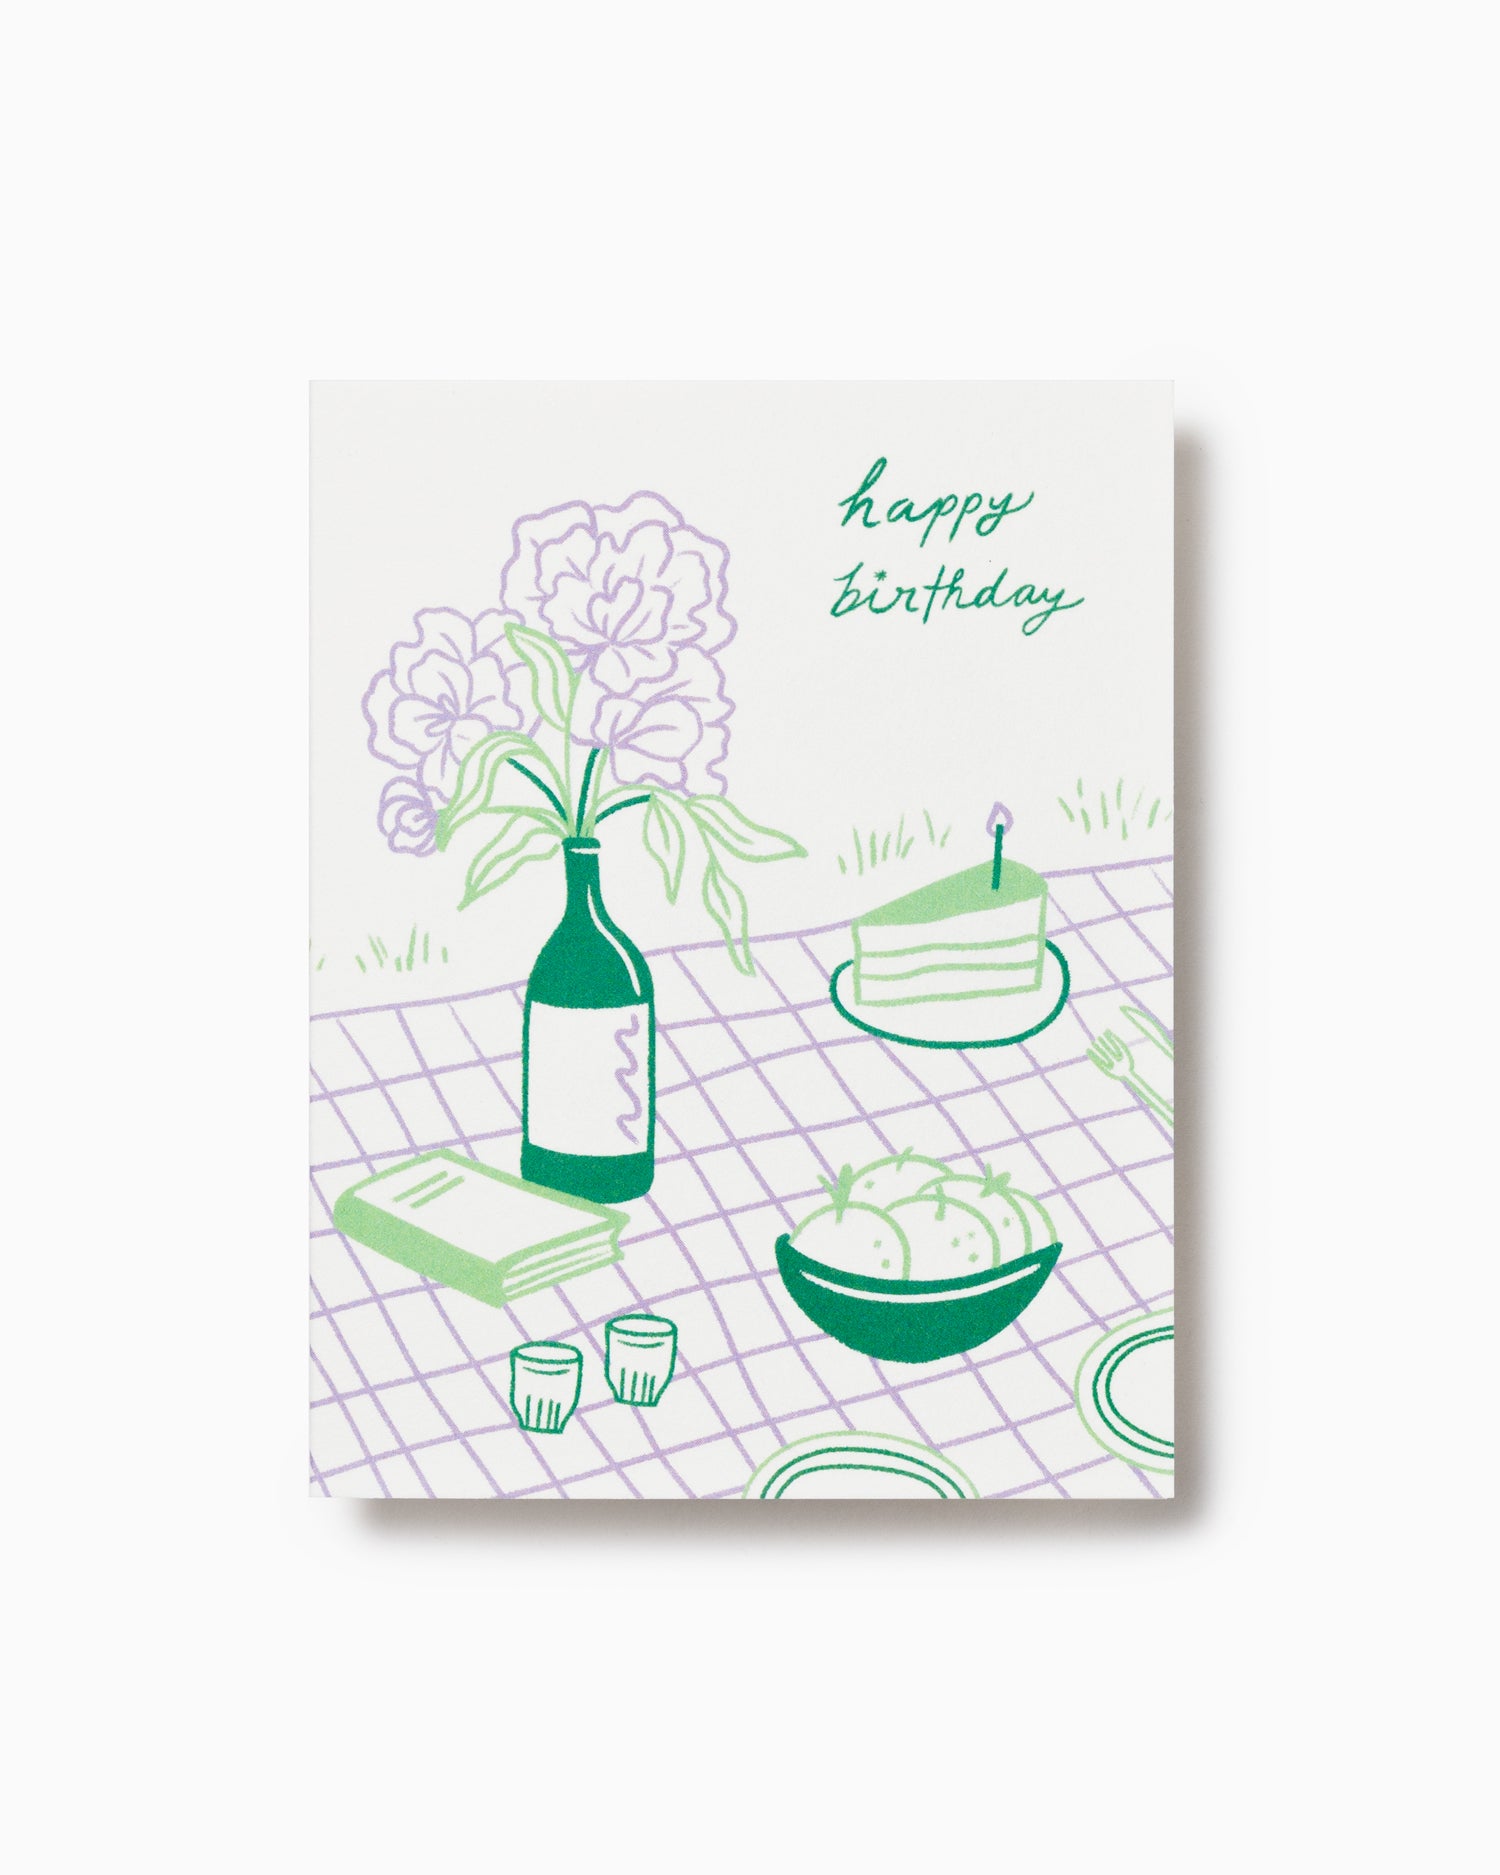 Happy Birthday - Picnic Greeting Card